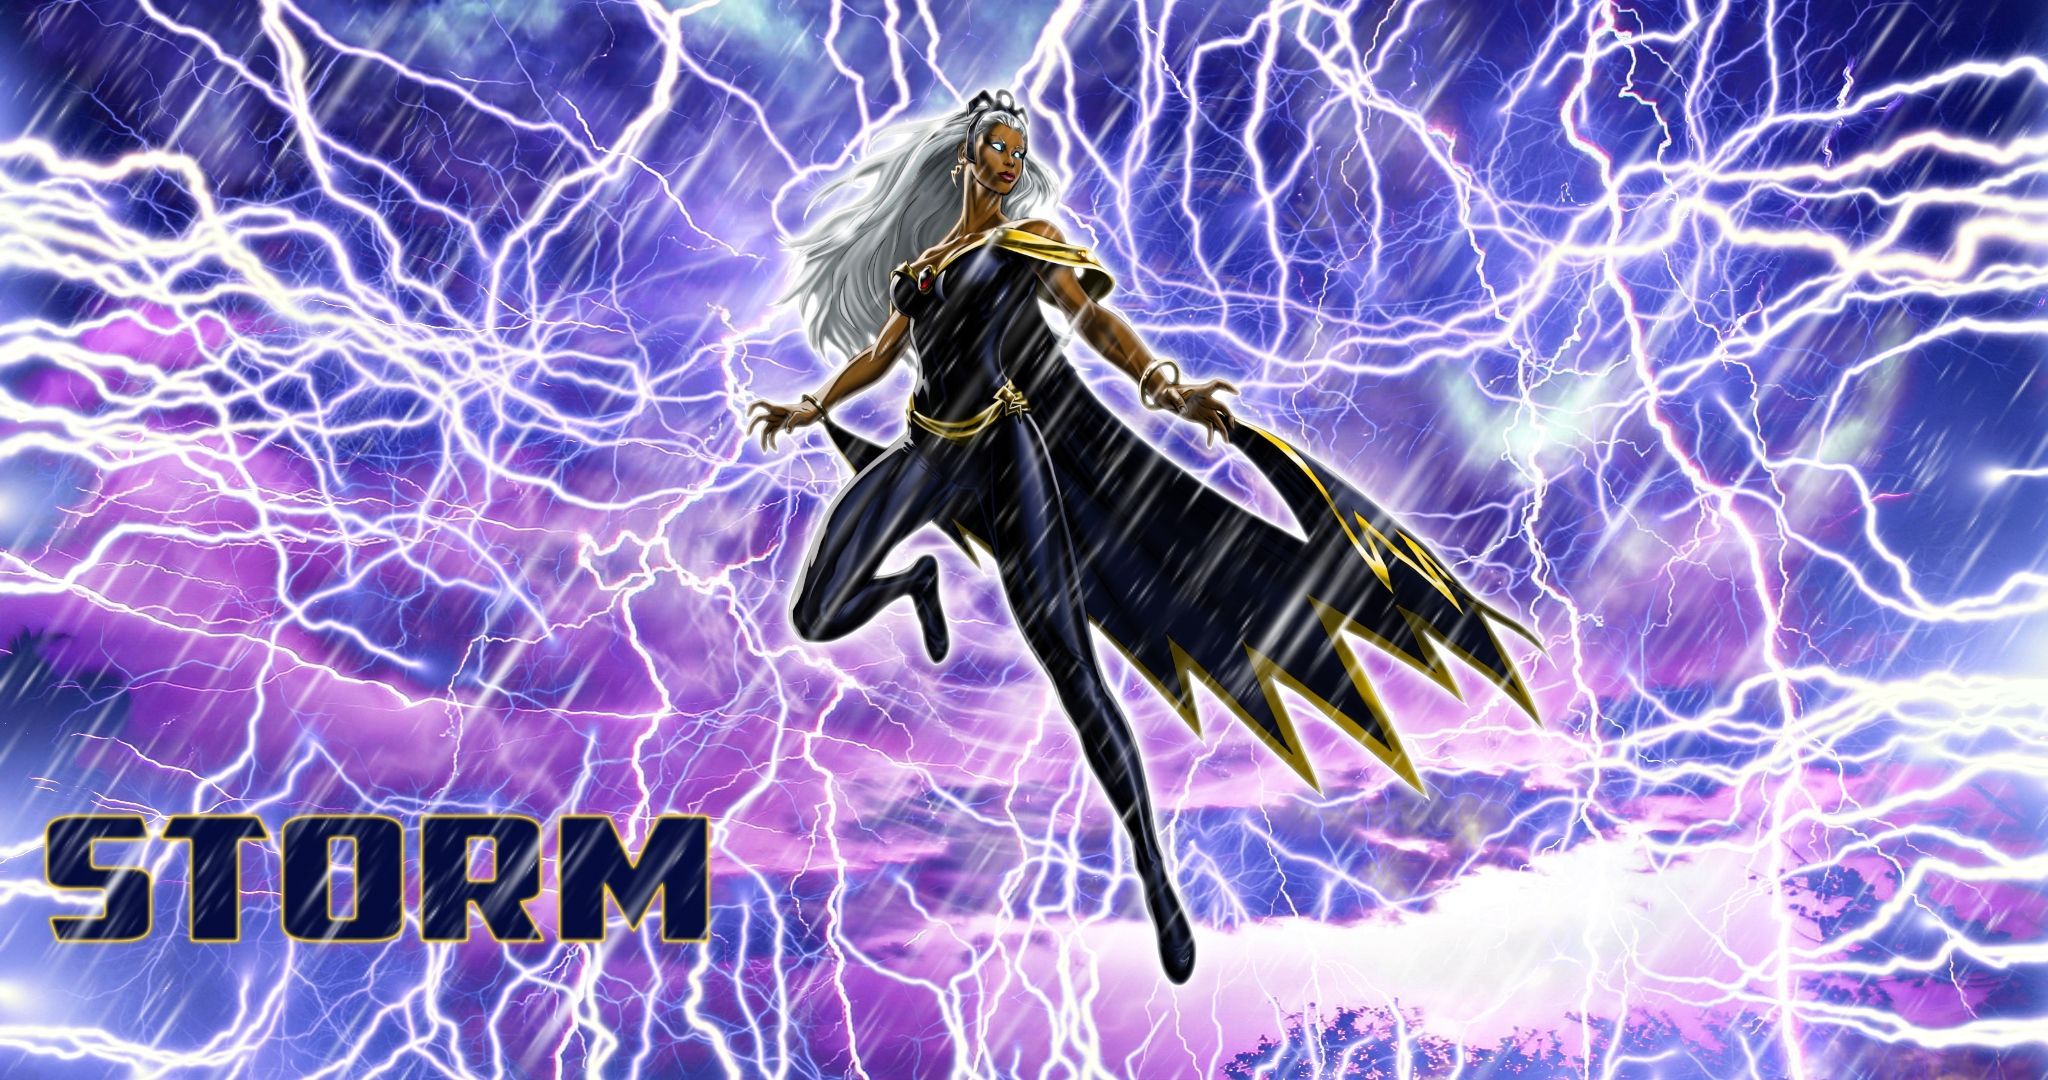 storm ororo munroe marvel comics x men HD wallpaper. Storm wallpaper, Storm marvel, X men